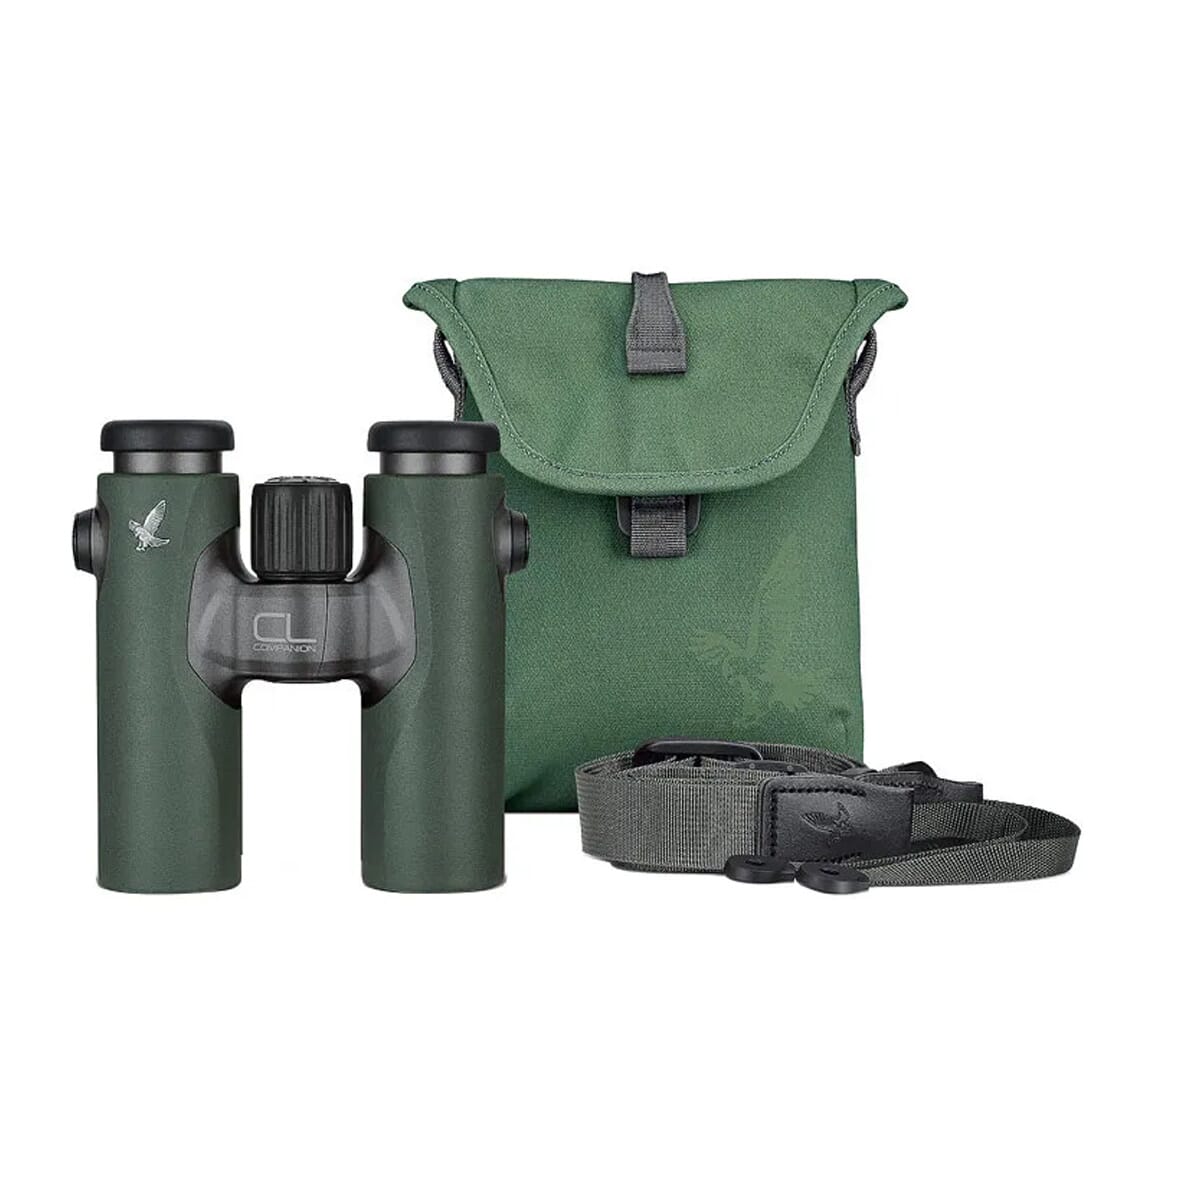 Swarovski CL Companion 8x30 (Green) Urban Jungle Binoculars 86335